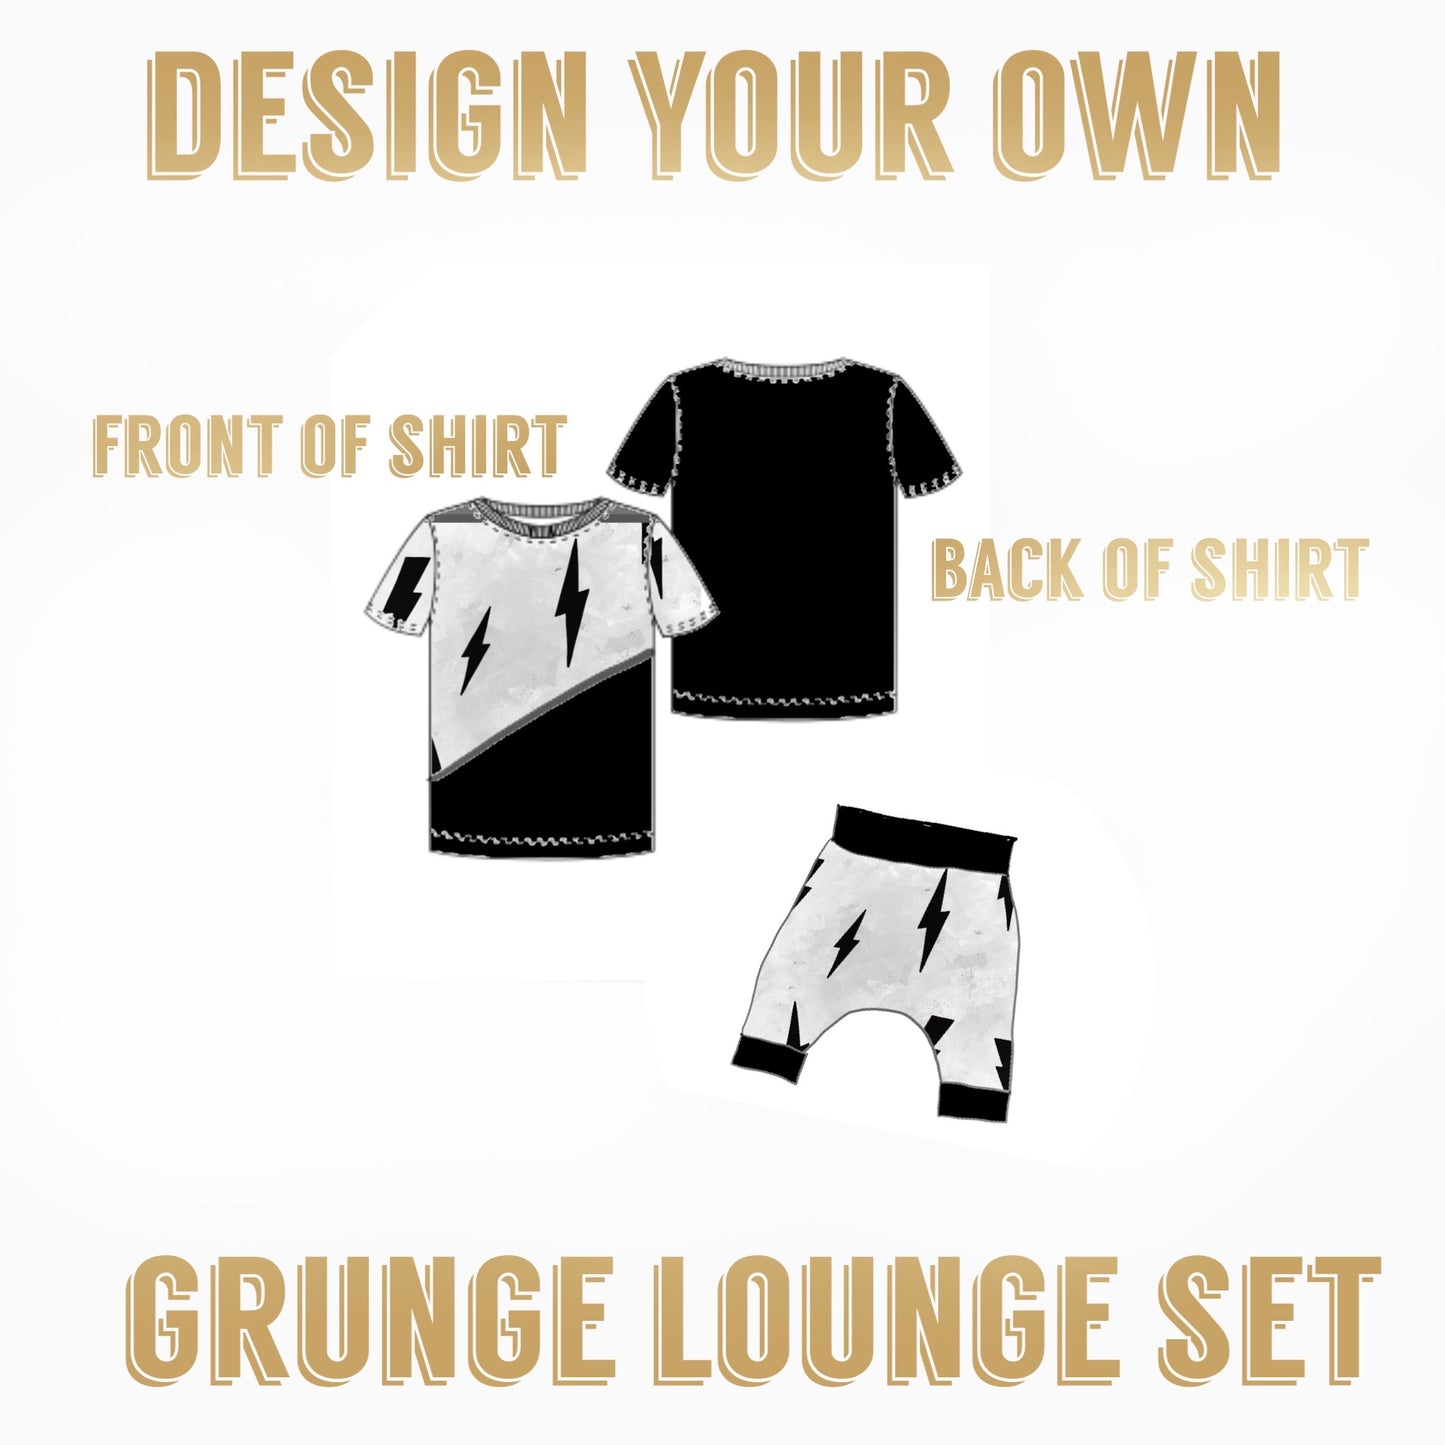 Design your own | Grunge Lounge Set